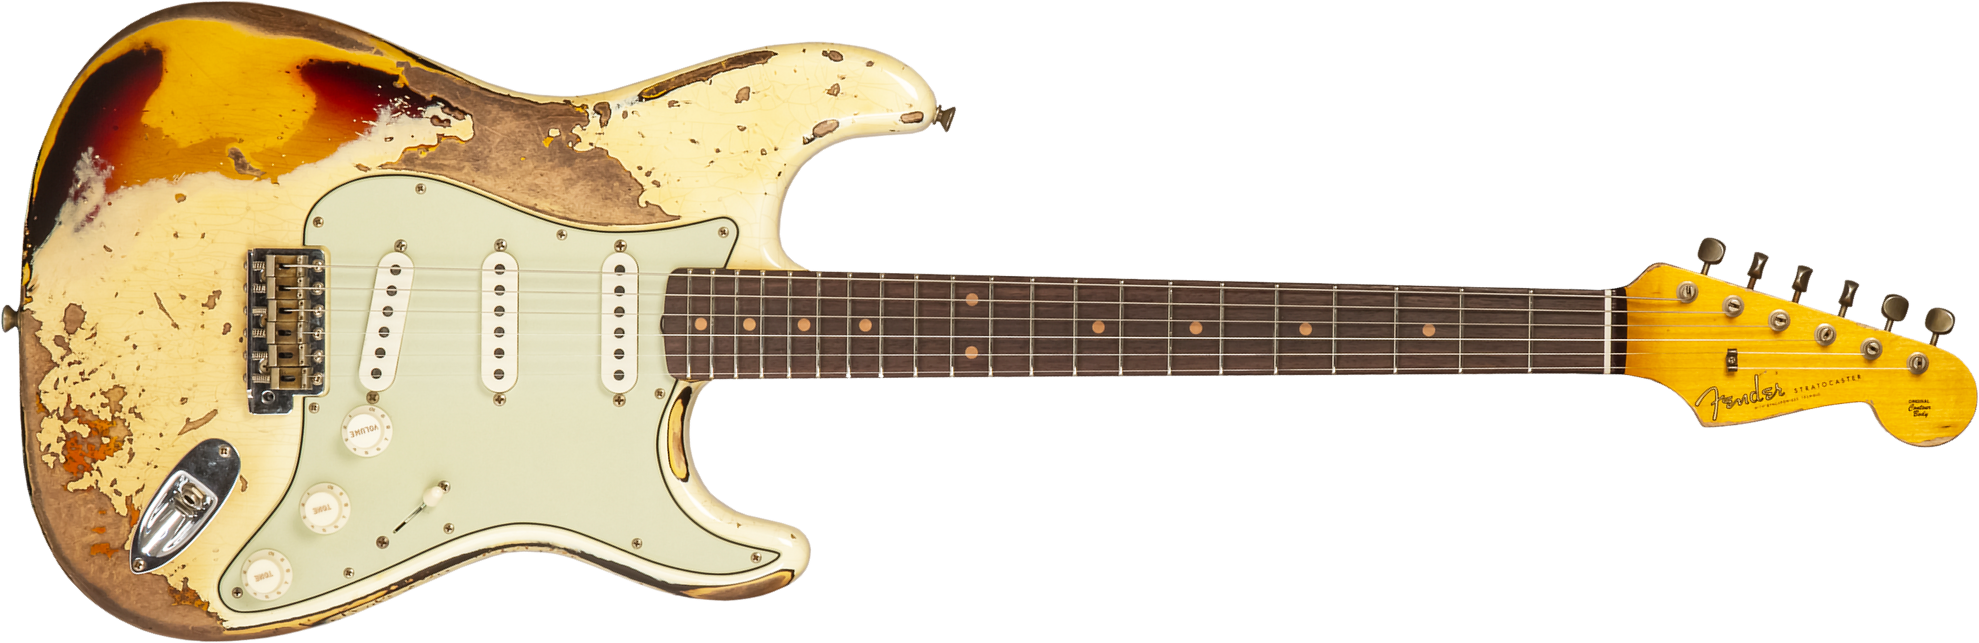 Fender Custom Shop Strat 1959 3s Trem Rw #cz576436 - Super Heavy Relic Vintage White O. 3-color Sunburs - E-Gitarre in Str-Form - Main picture